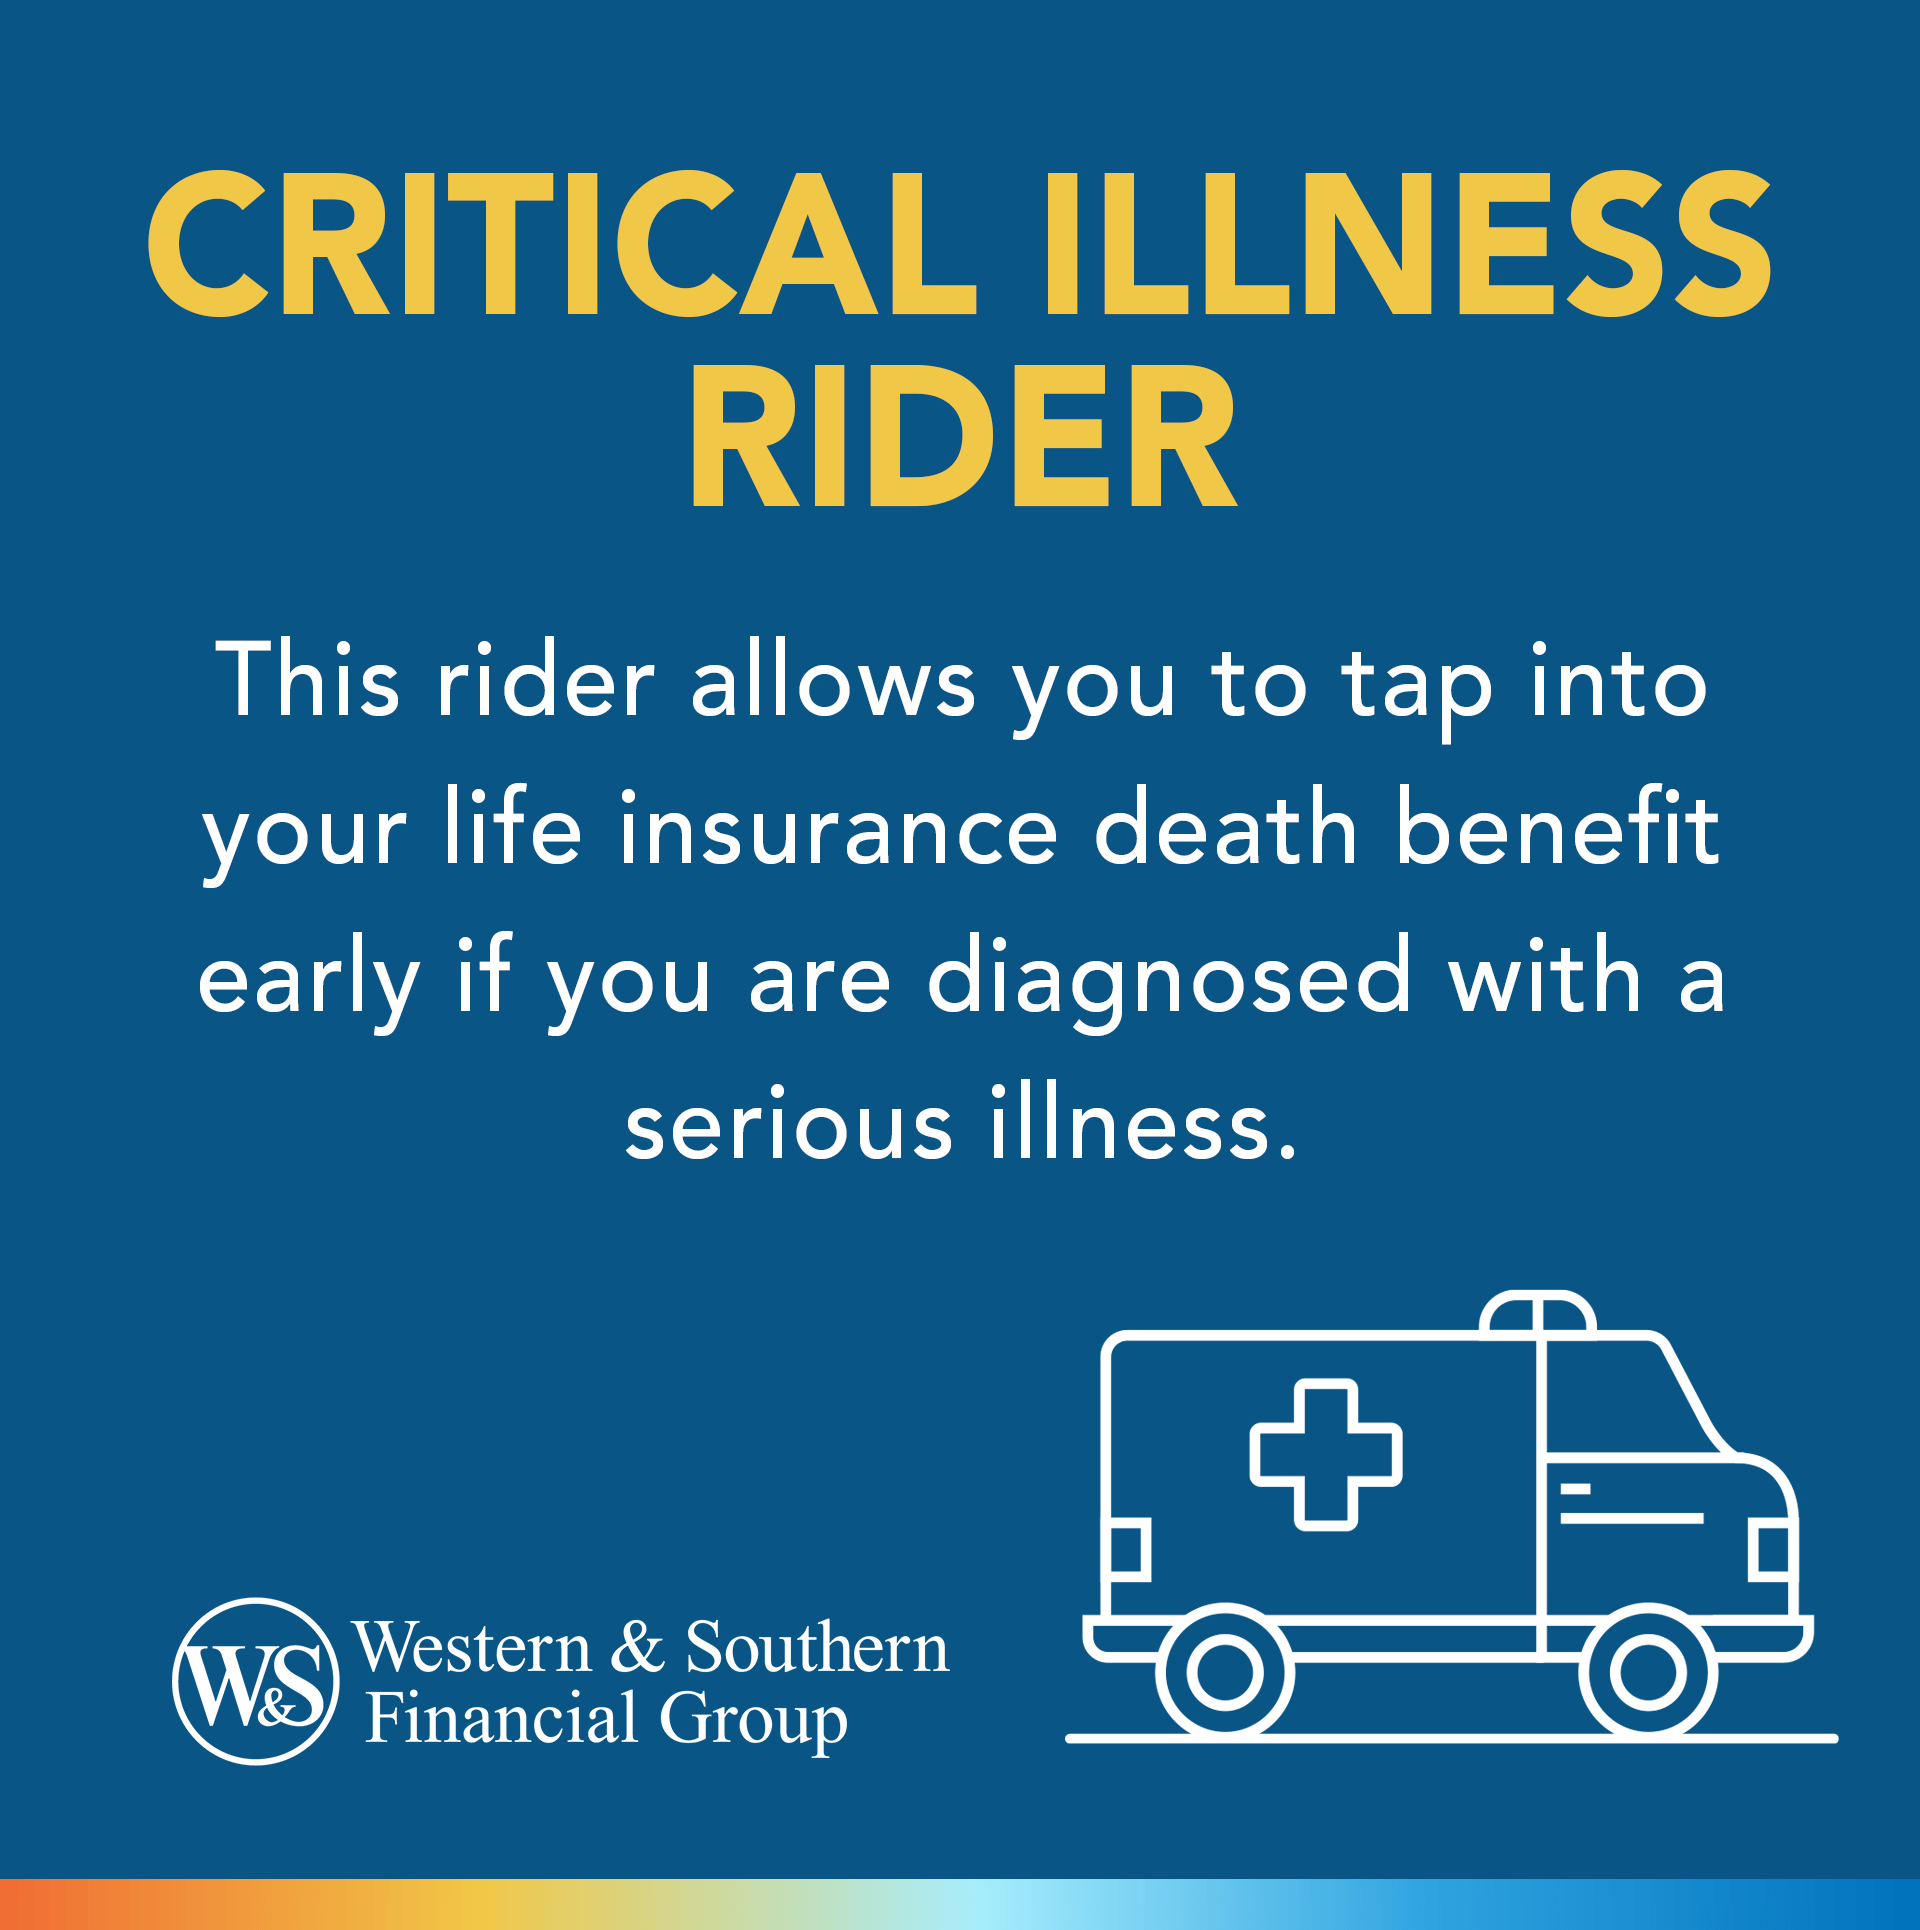 Critical Illness Rider definition